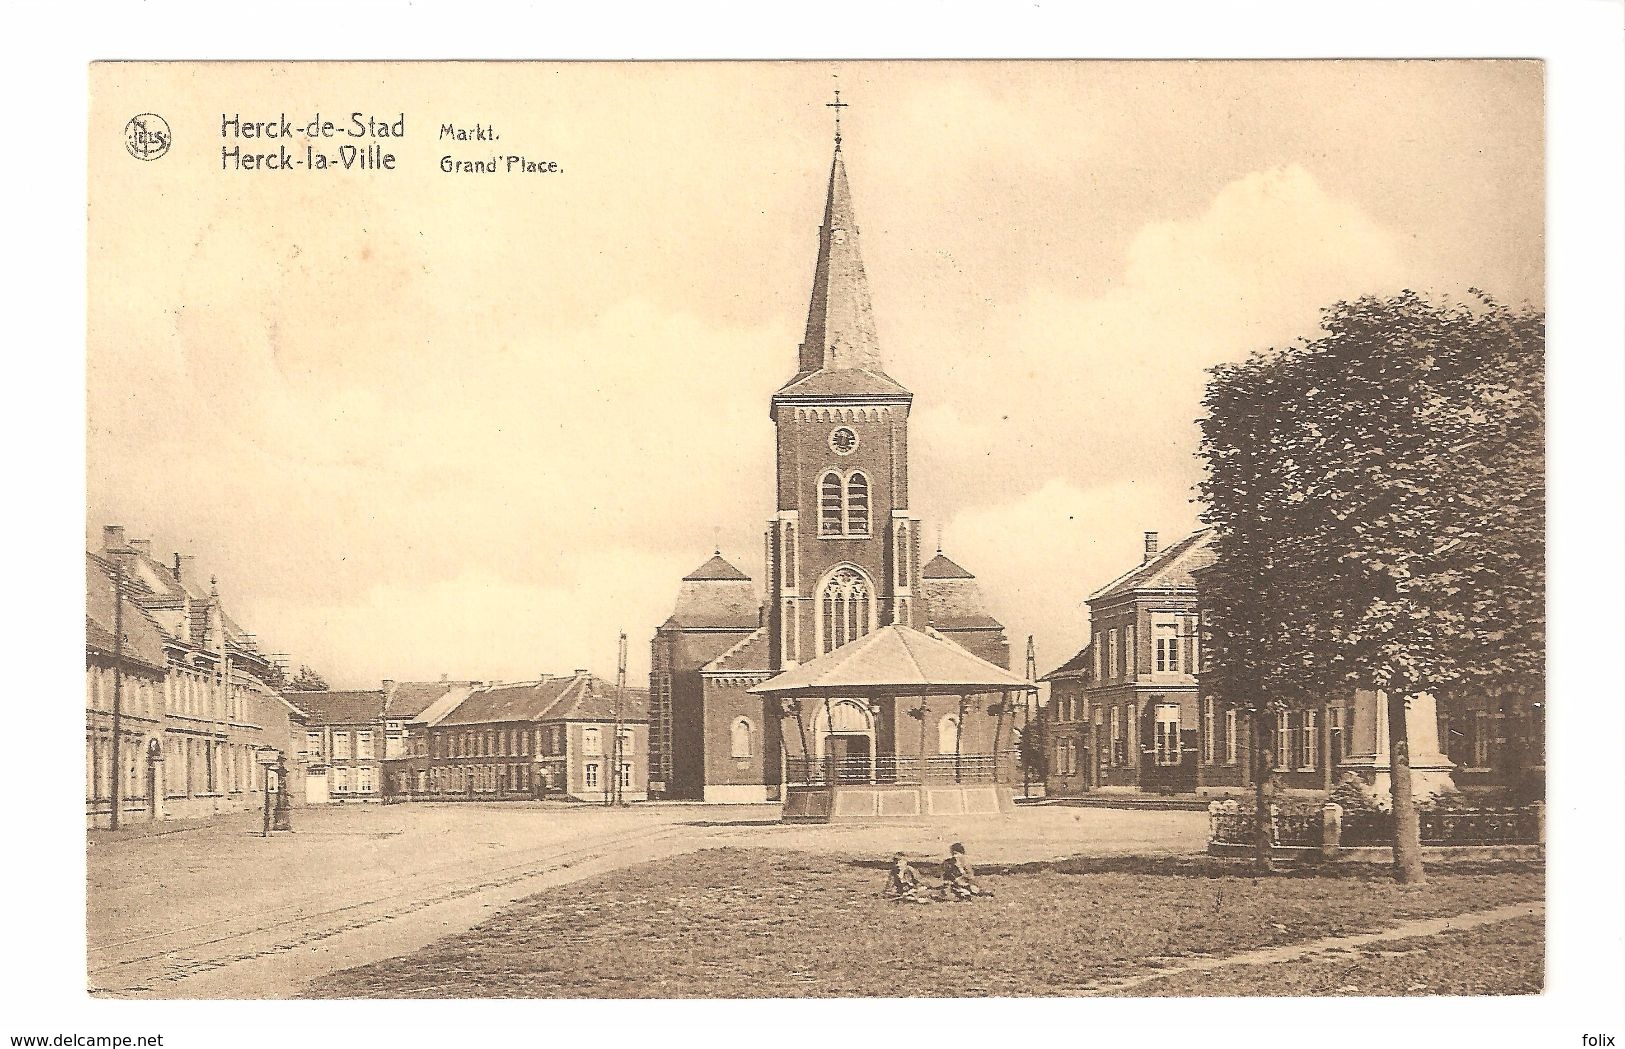 Herck-de-Stad - Markt / Grand'Place - Uitgave Brems, Imprimeur, Herk-de-Stad - 1930 - Herk-de-Stad